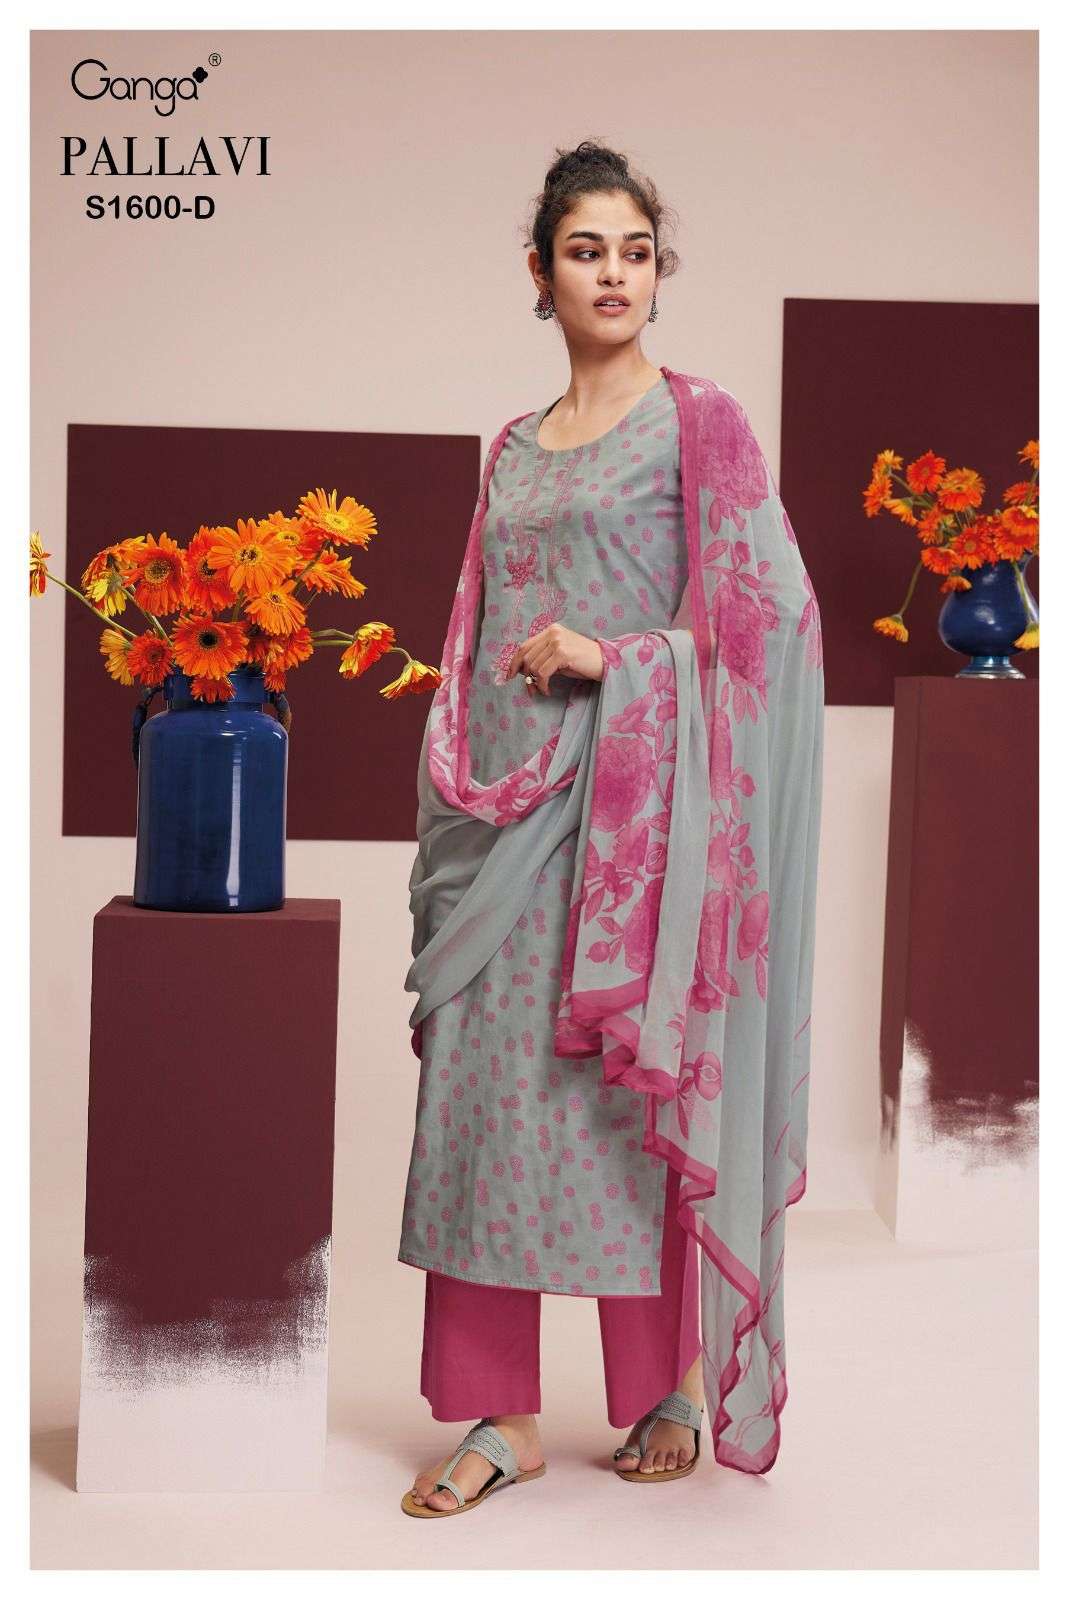 ganga pallavi 1600 series trendy designer top bottom with dupatta latest collection surat 